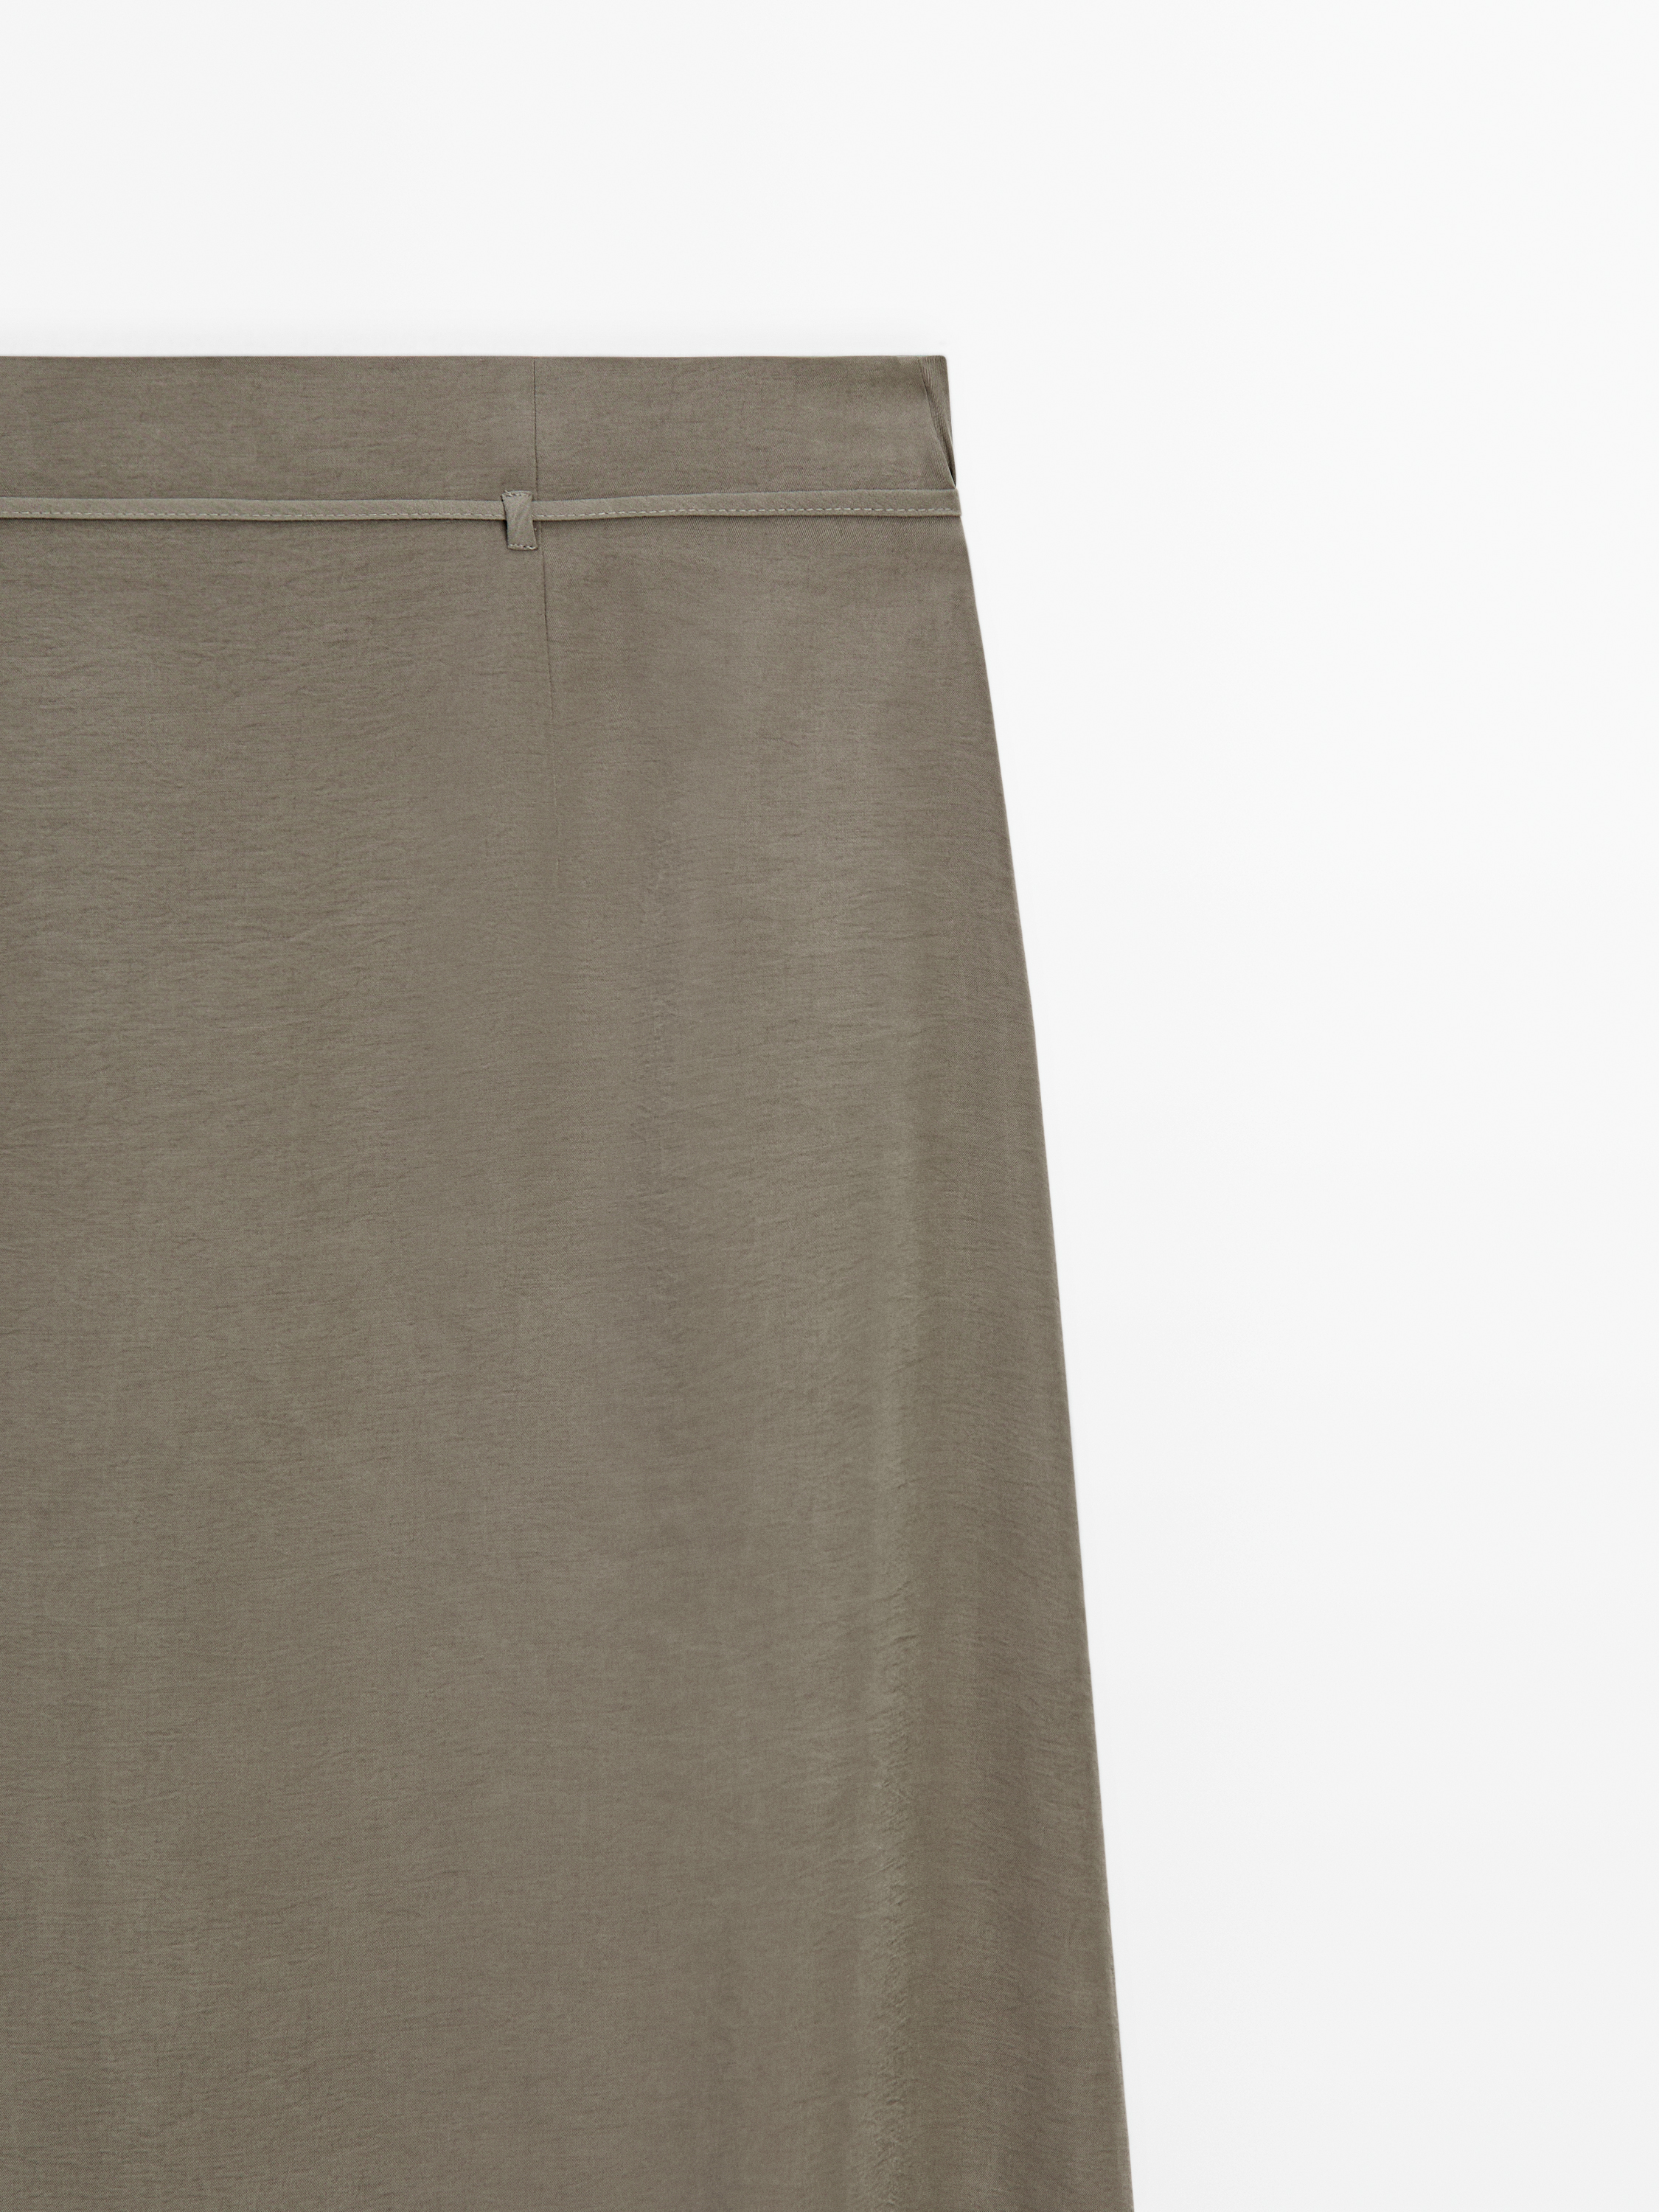 Flowing midi skirt with drawstring detail